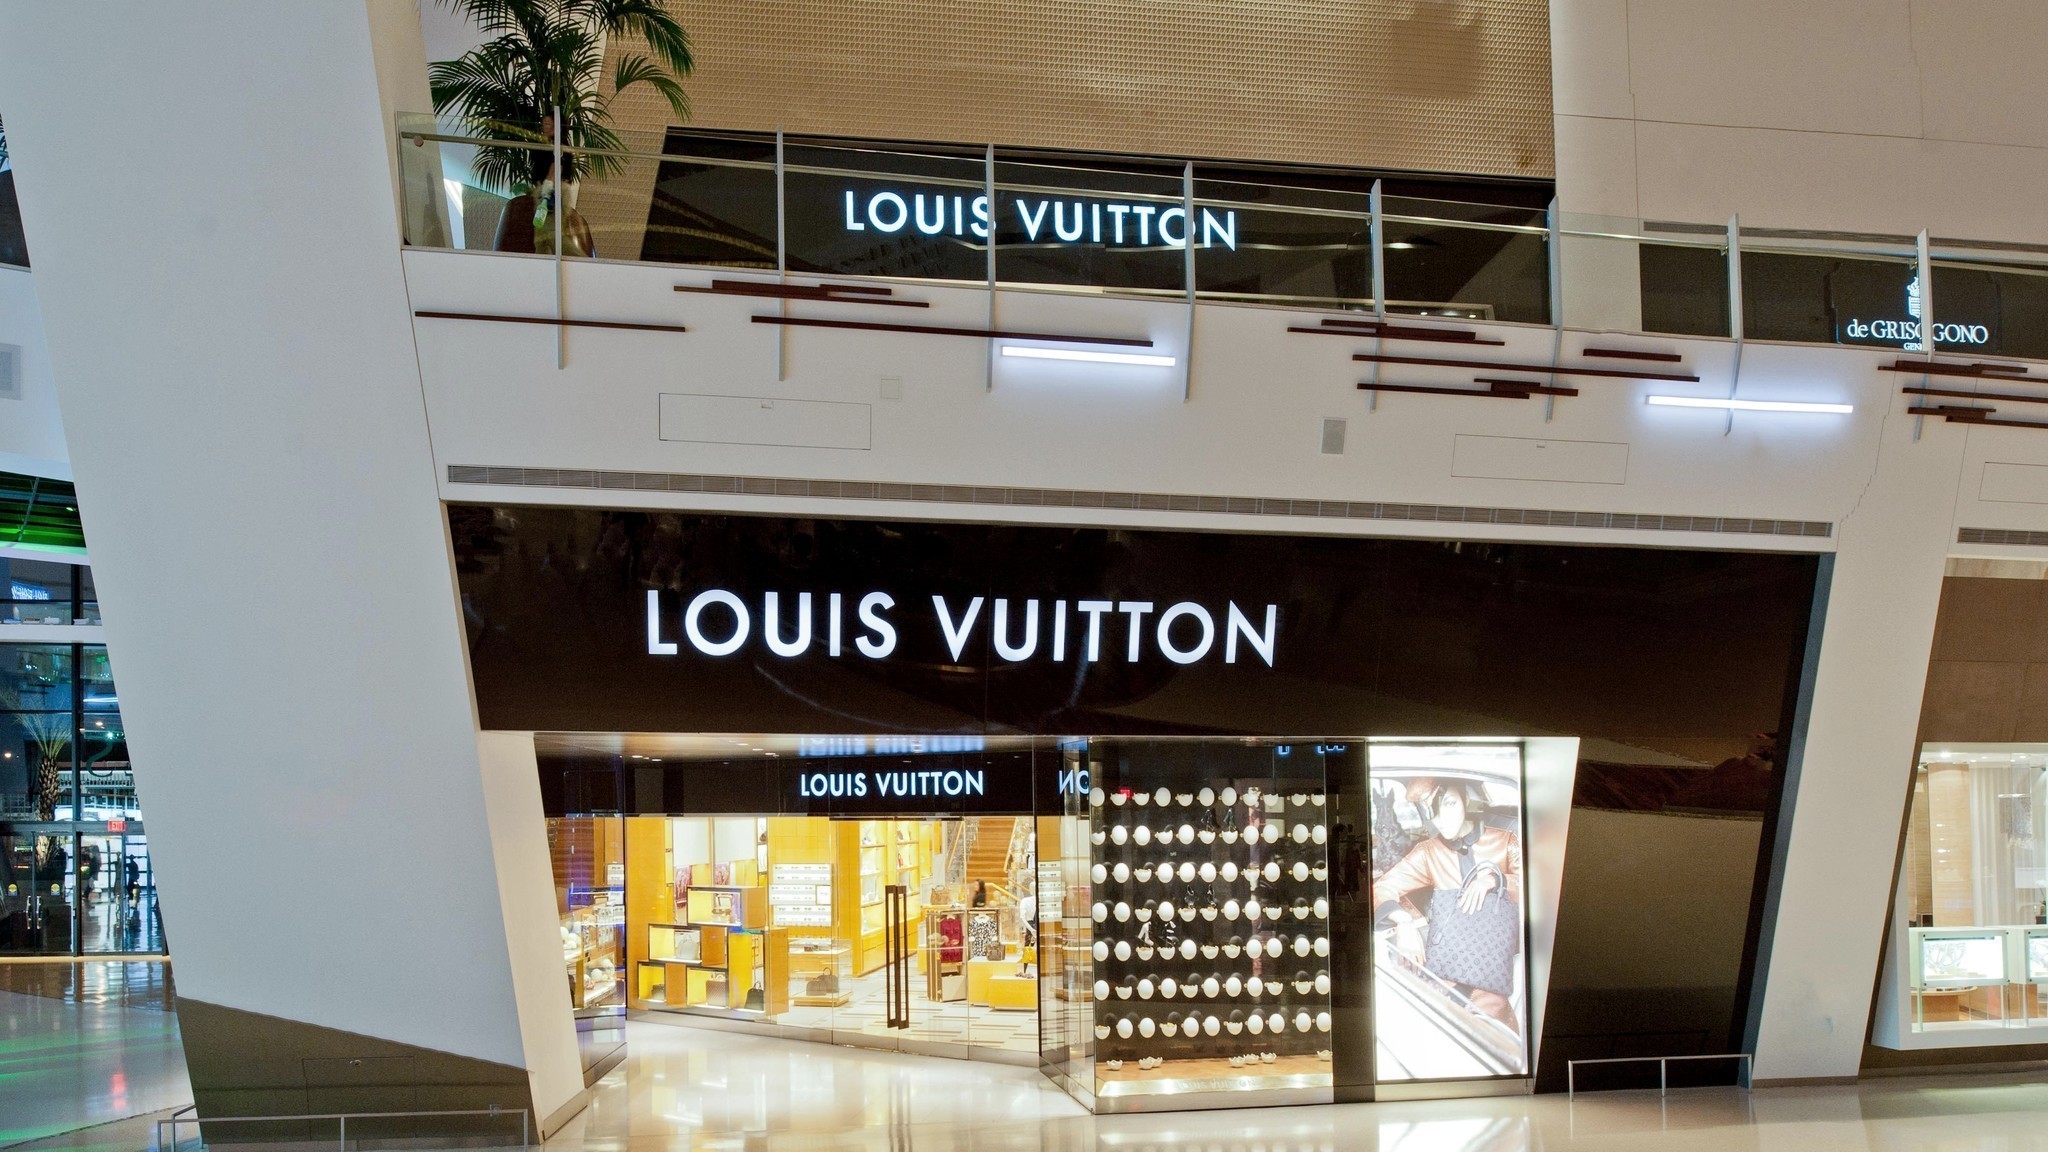 Tijuana shoplifting ring hit U.S. malls for $20 million in luxury goods, authorities say - LA Times